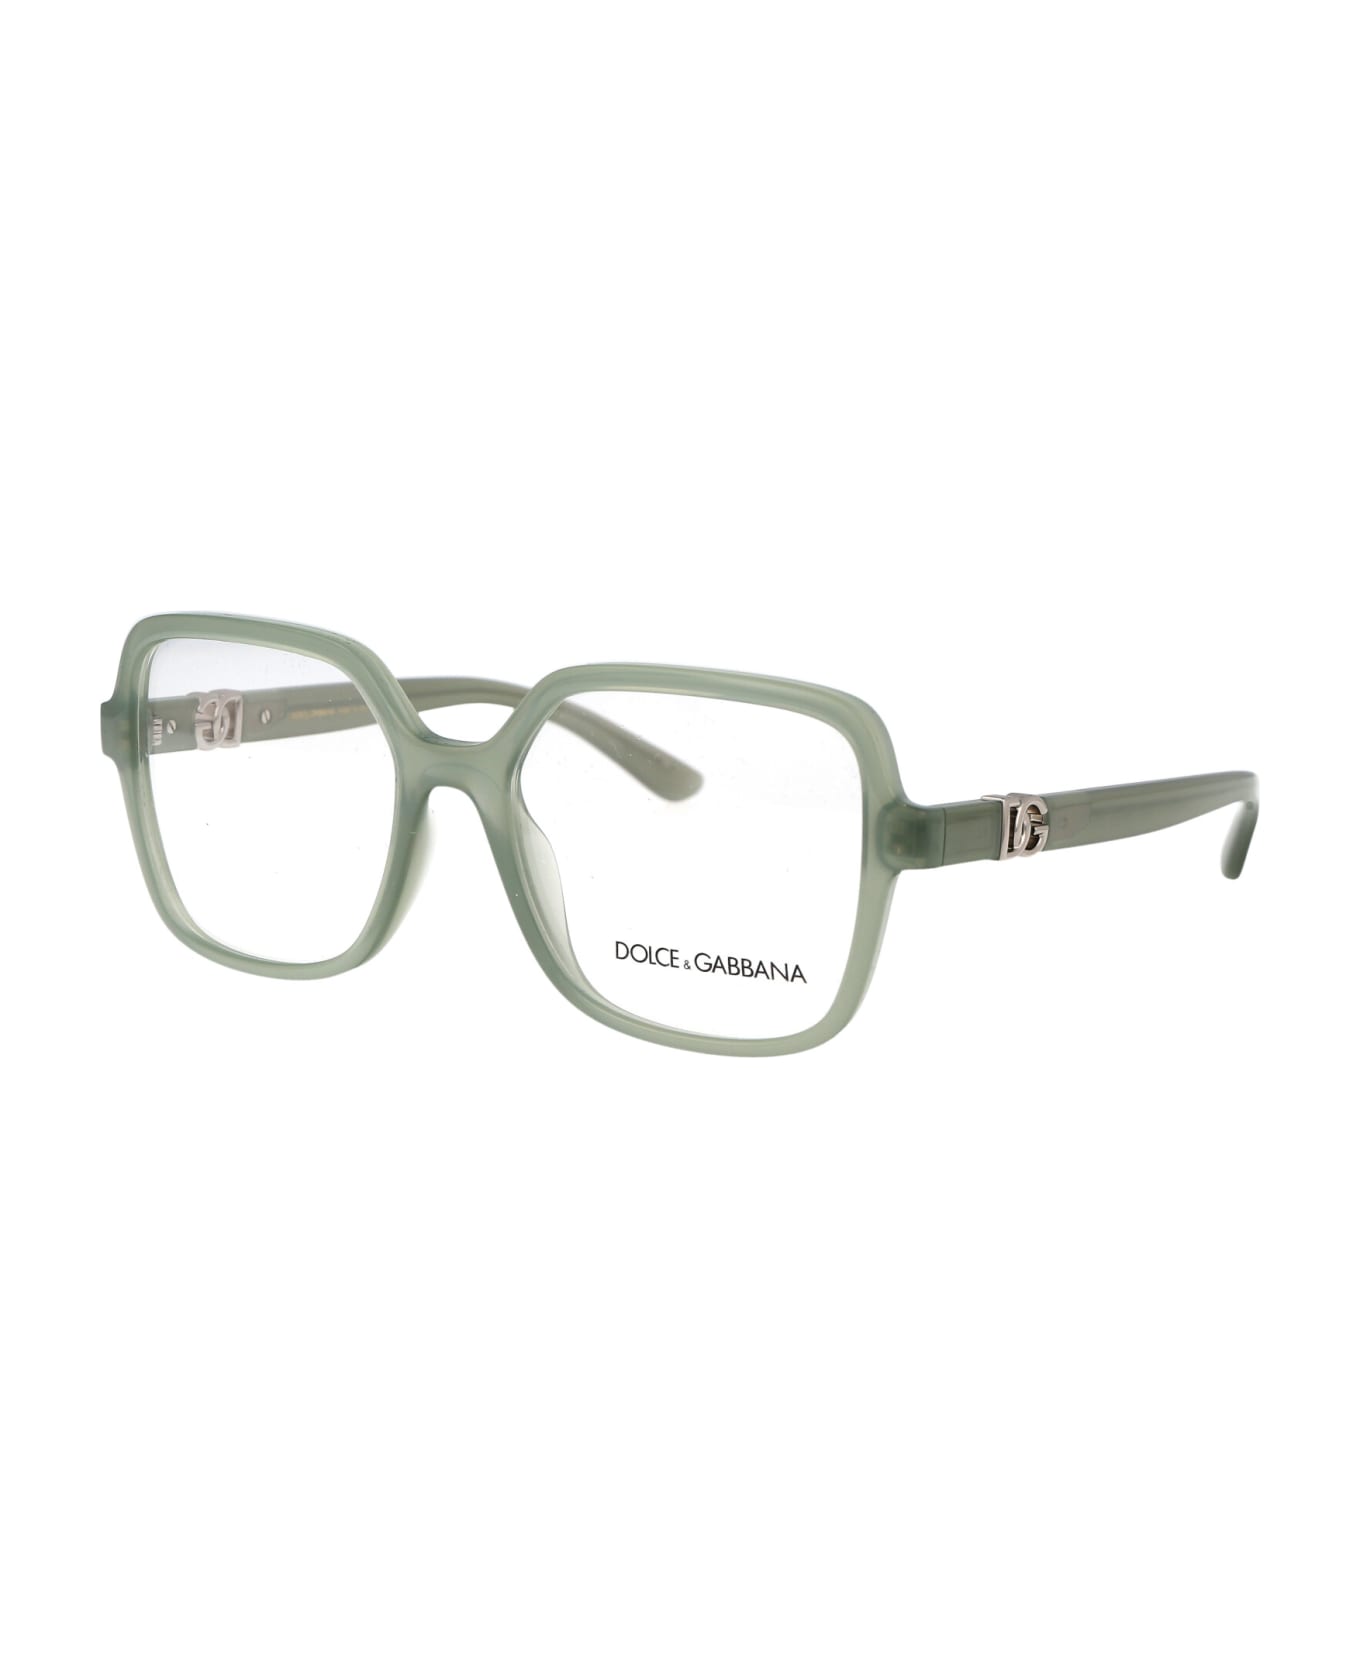 Dolce & Gabbana Eyewear 0dg5105u Glasses - 3345 Milky Green